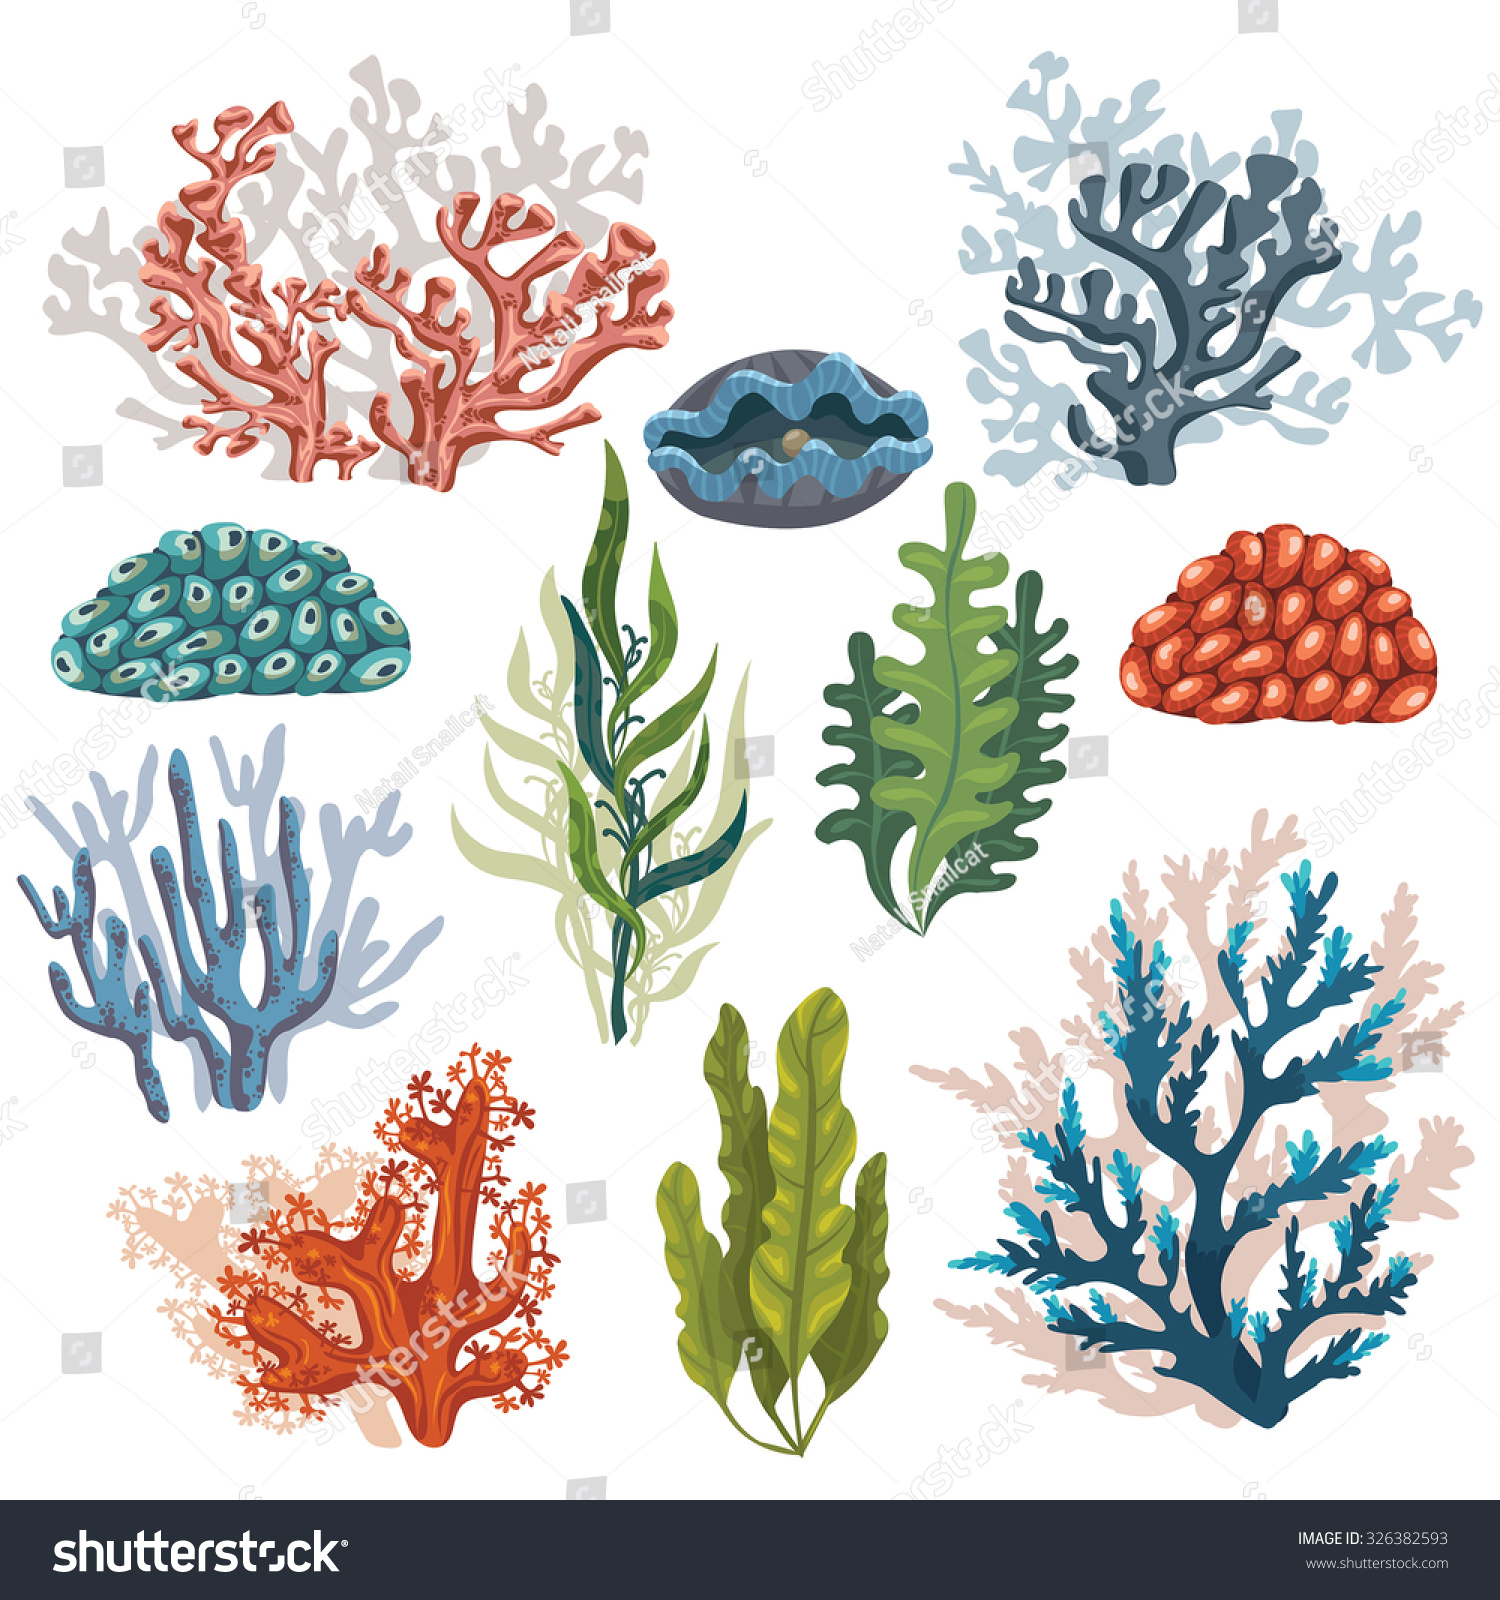 underwater plants clipart - photo #38